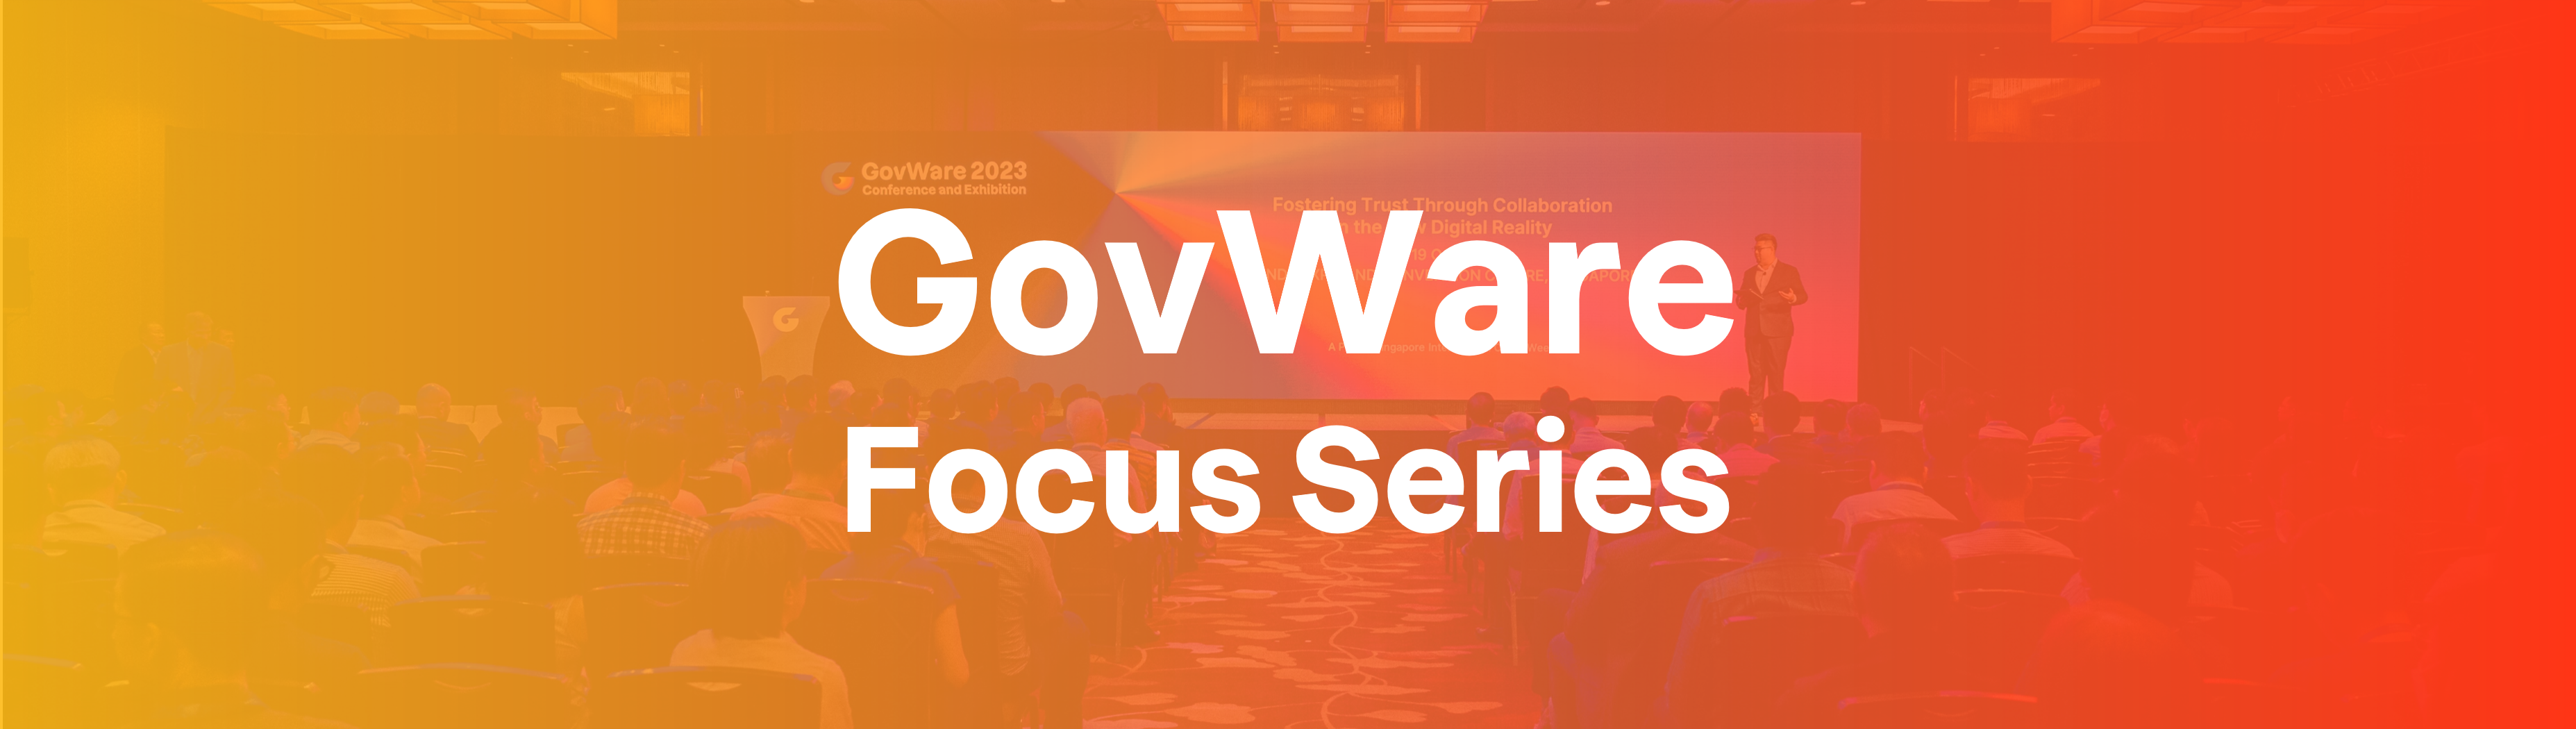 GovWare Focus Series